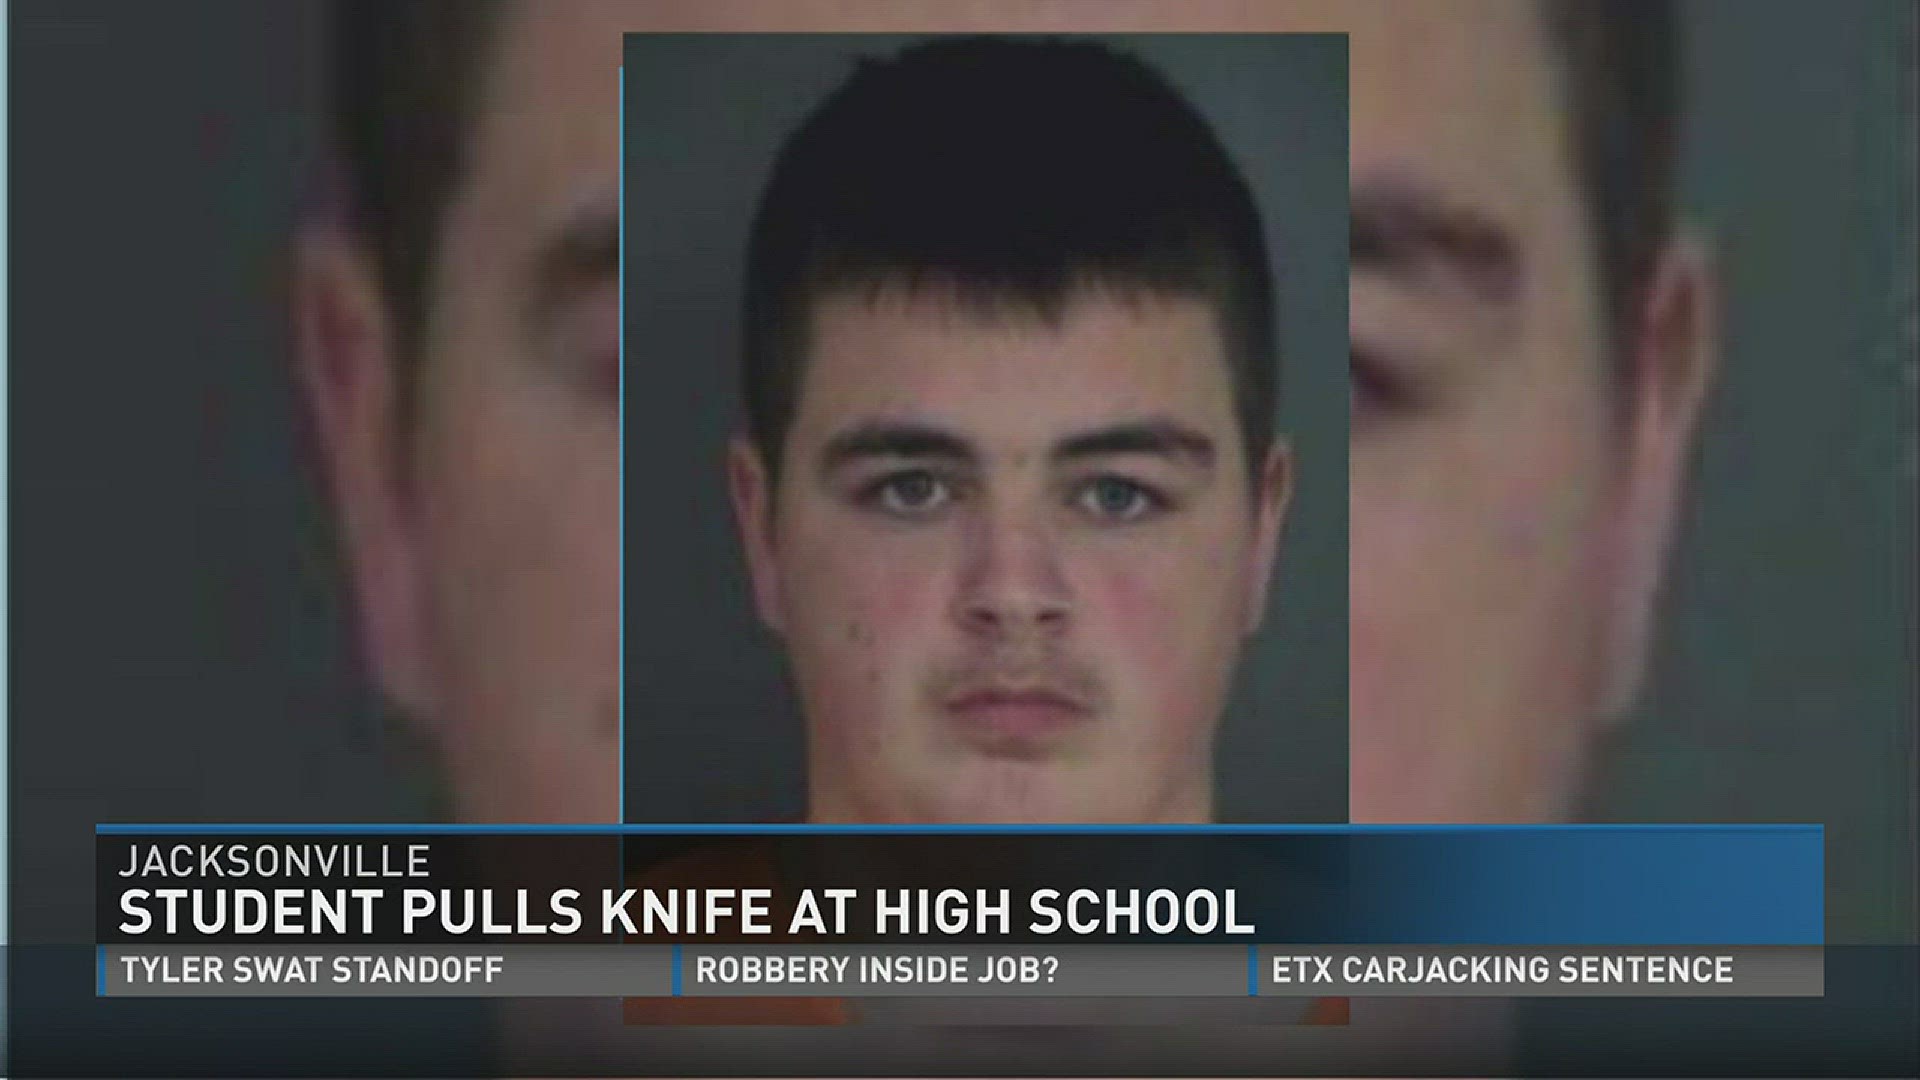 Parents concerned after student pulls knife at high school